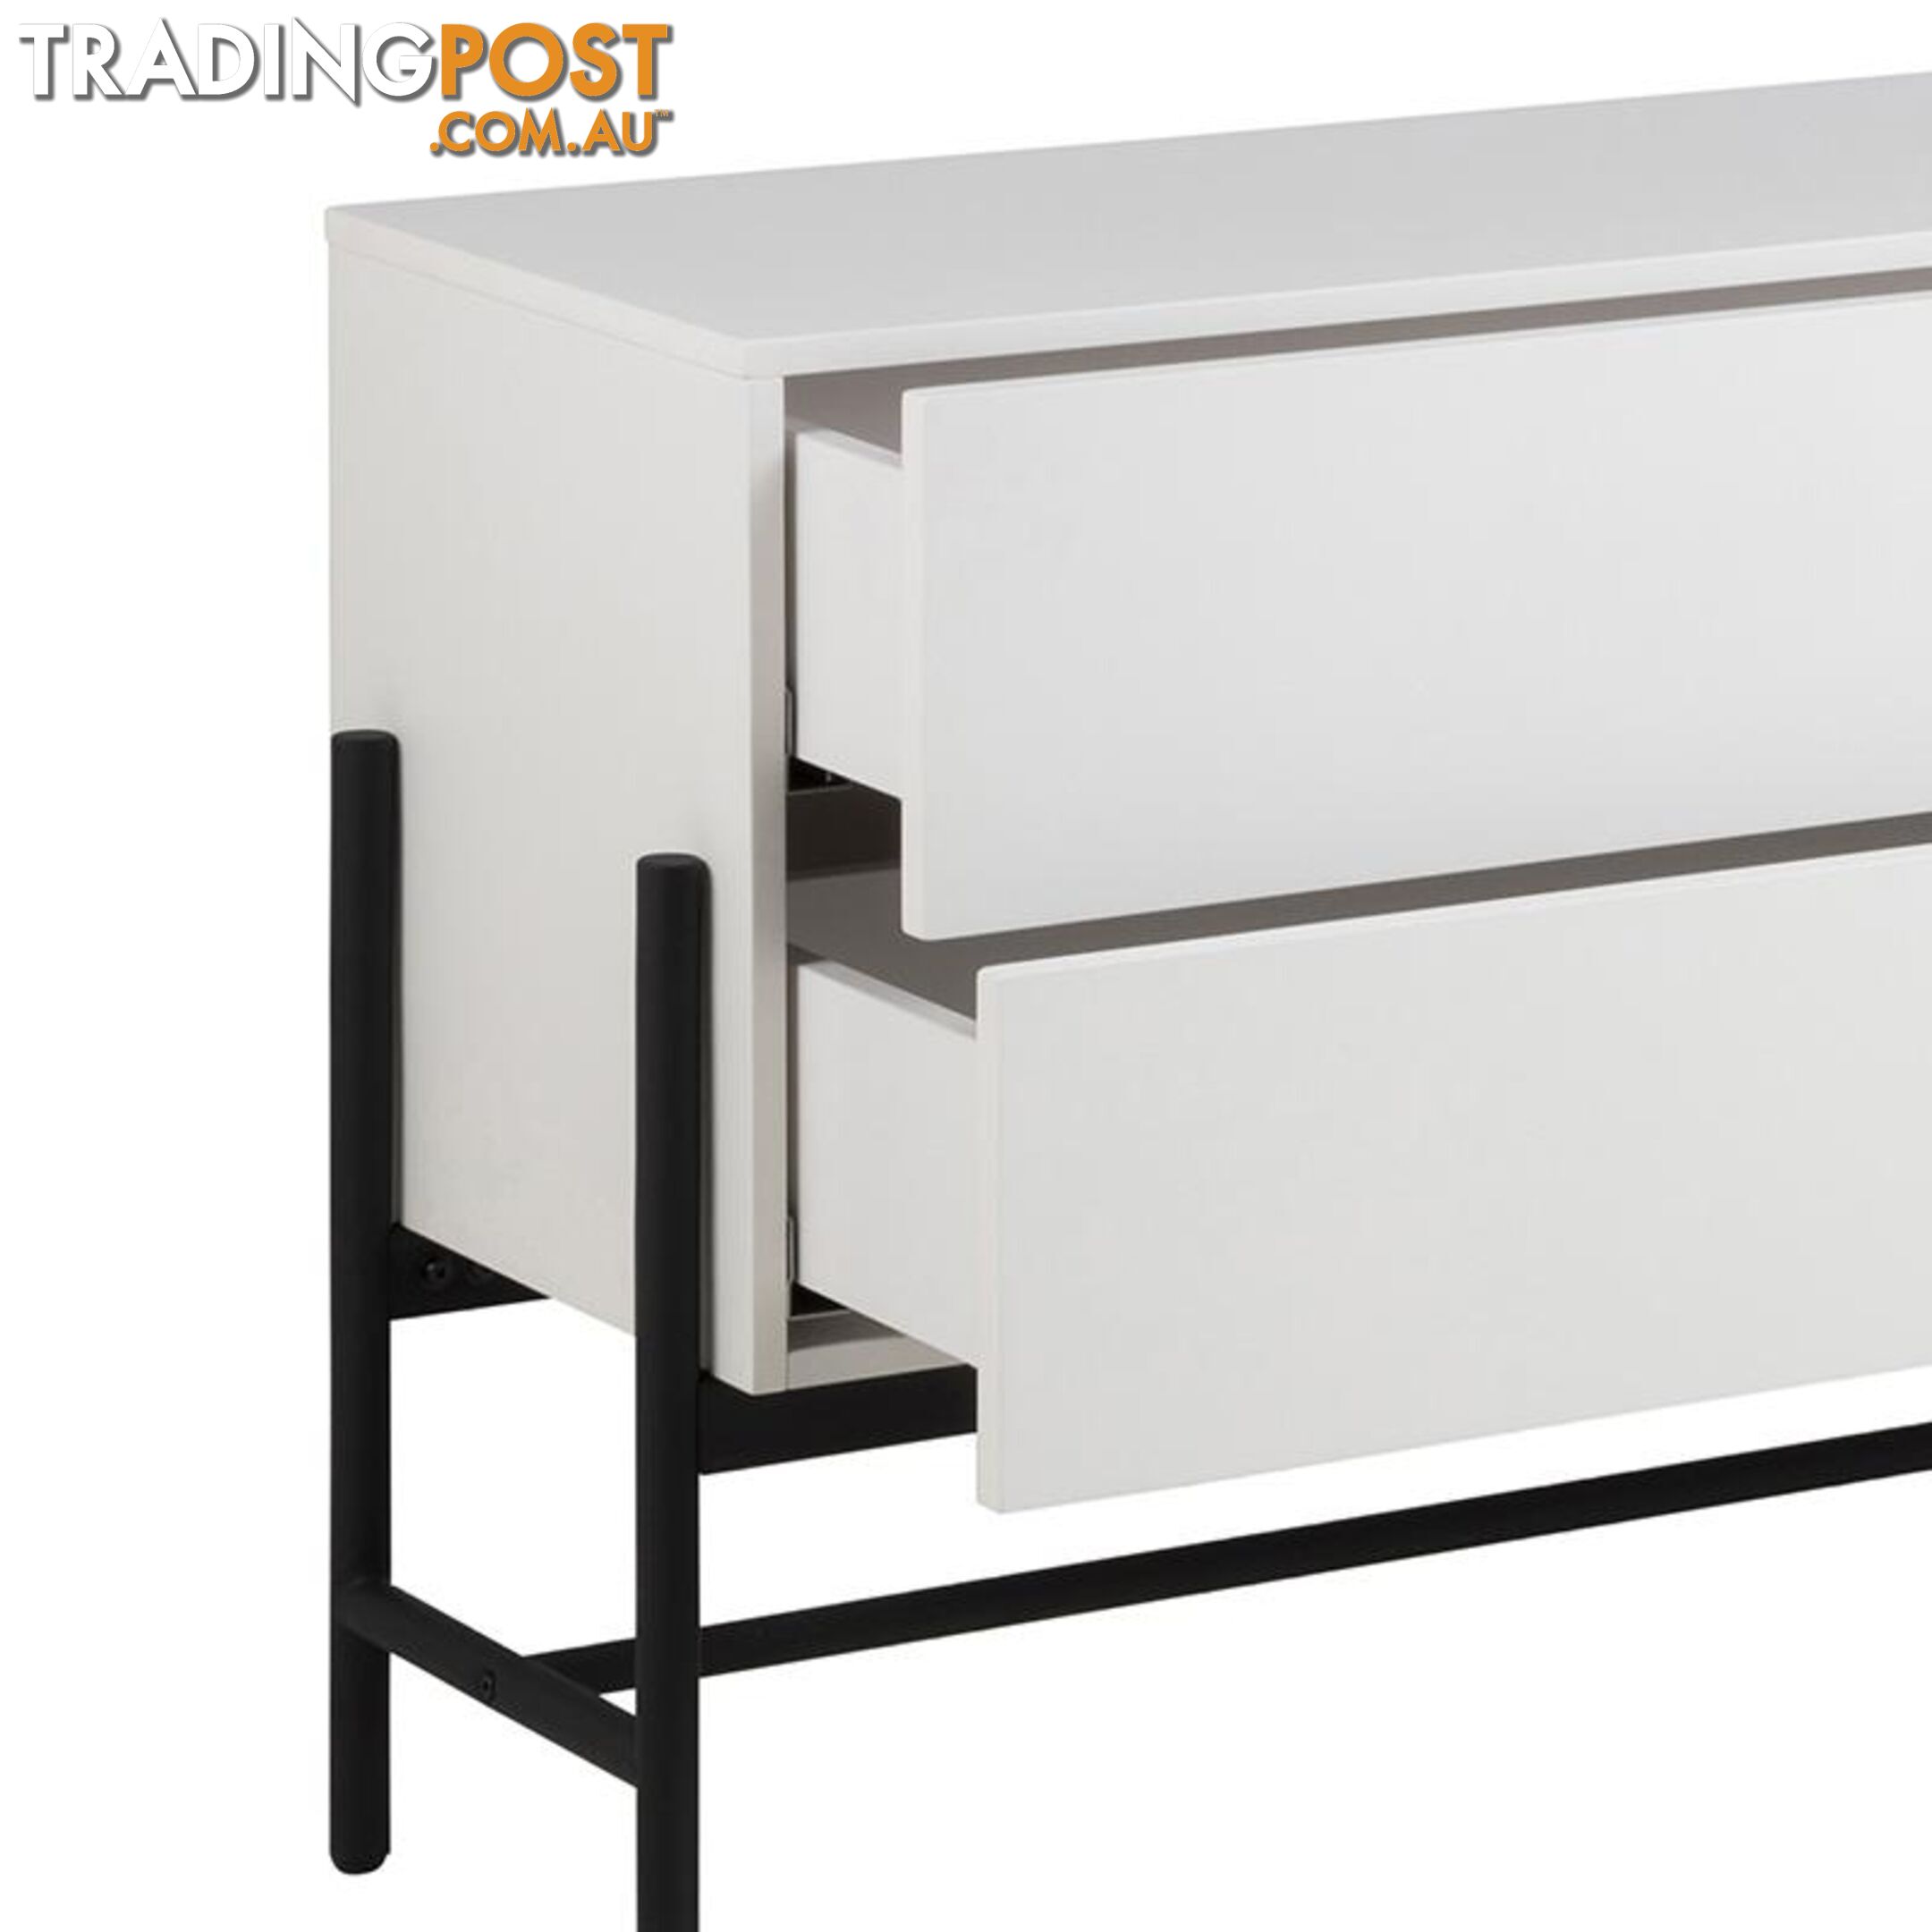 MOGEN Sideboard 185cm - White & Black - AC-H000018851 - 5713941044075